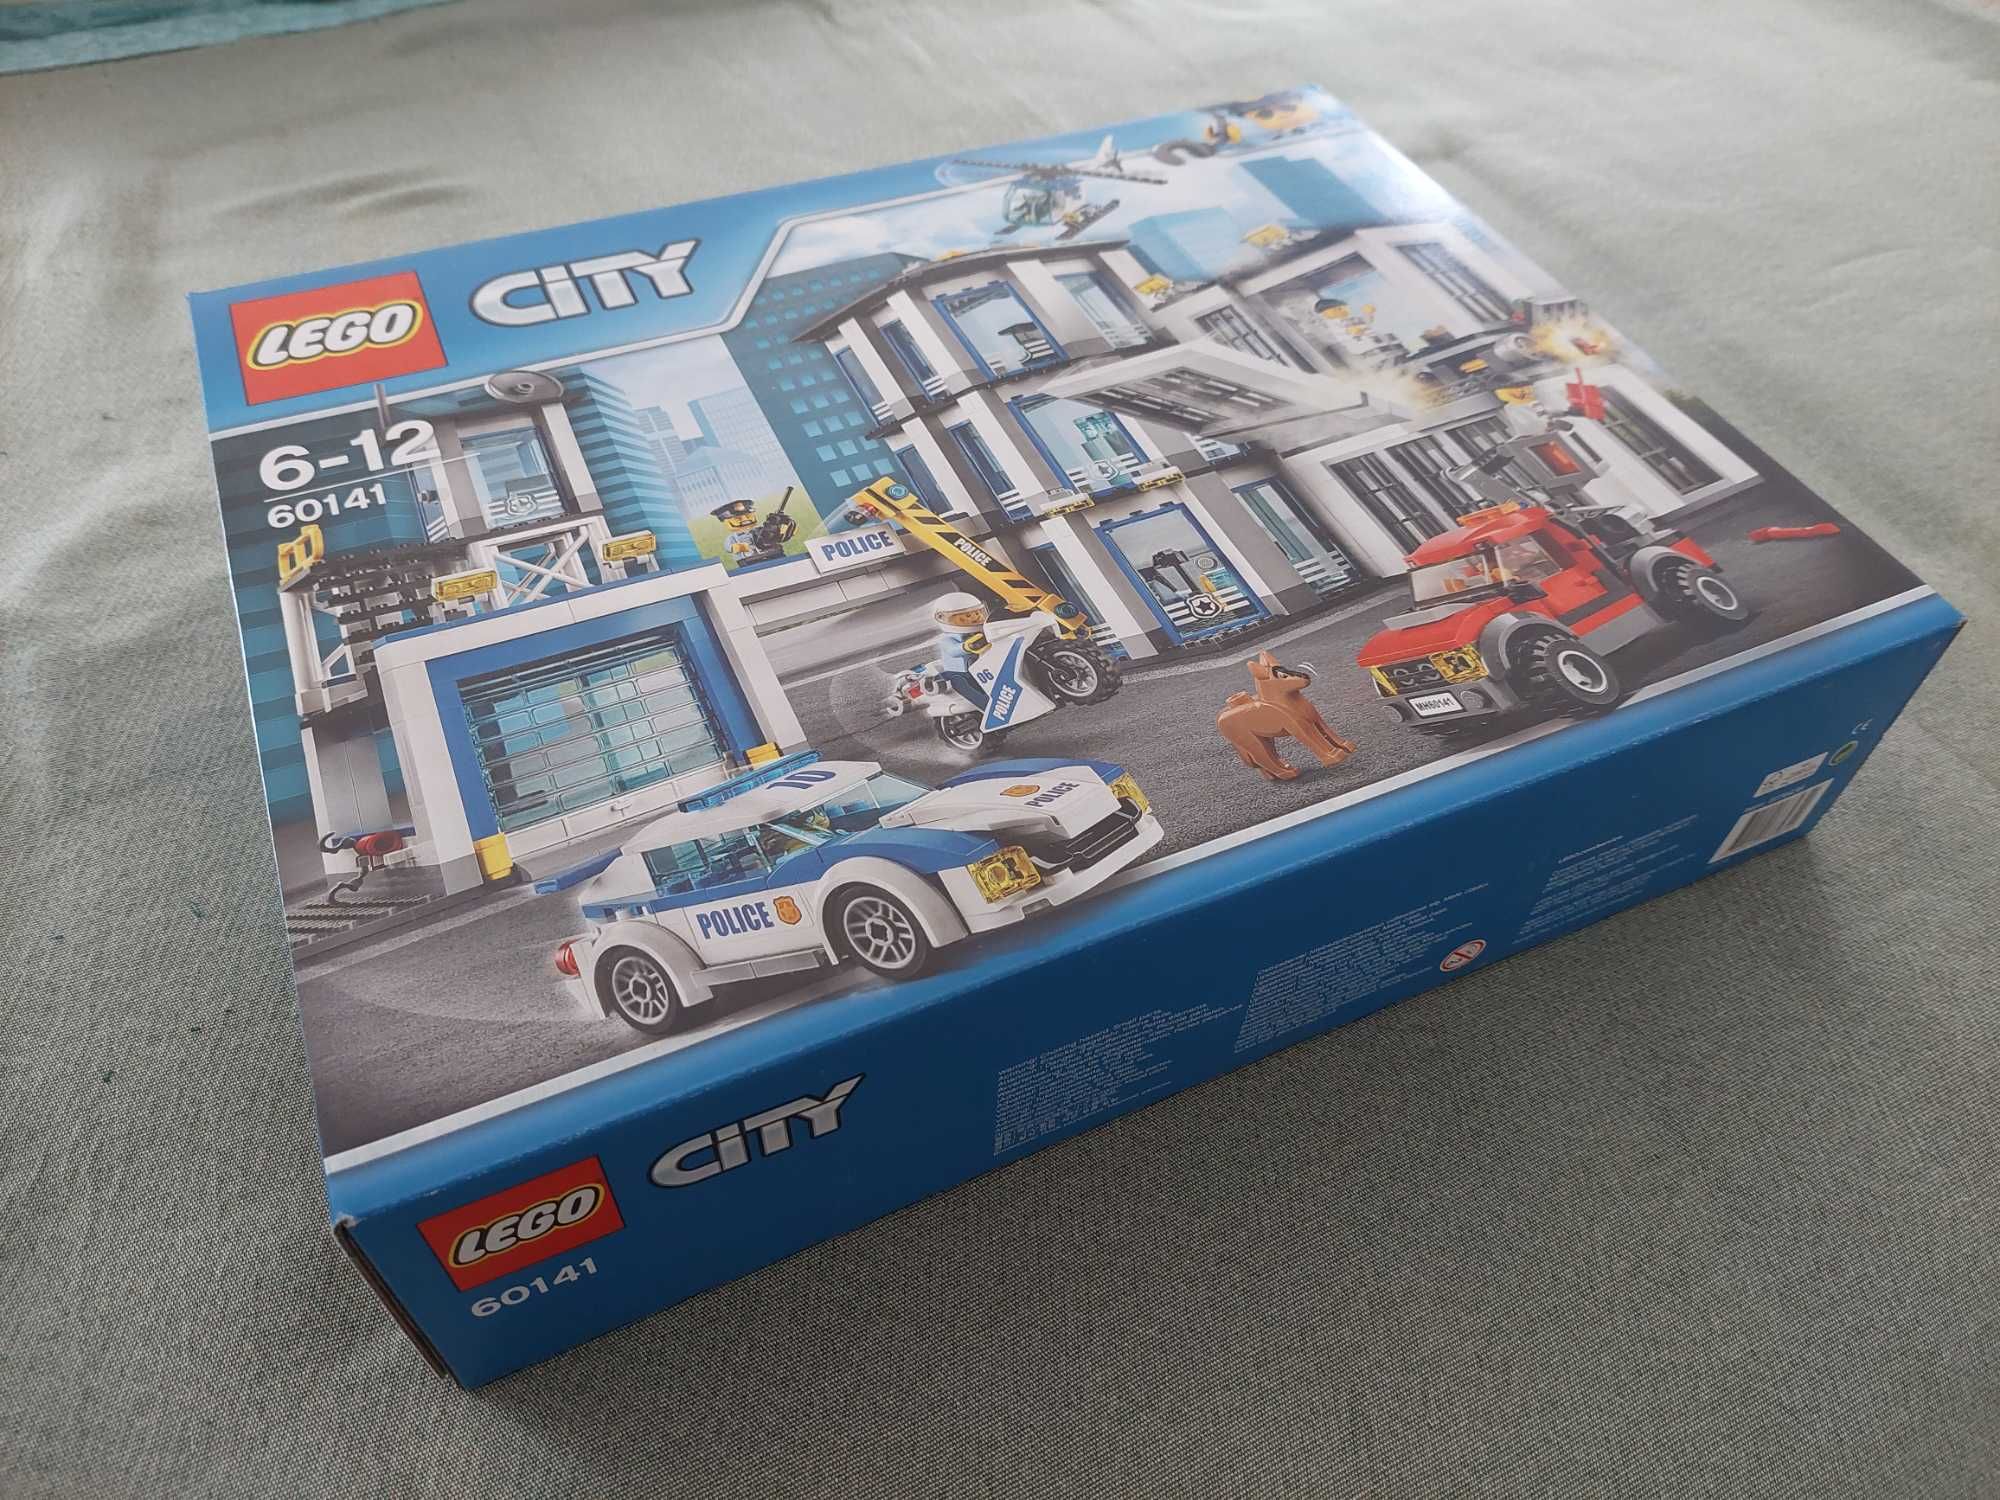 Lego City 60141 selado e descontinuado